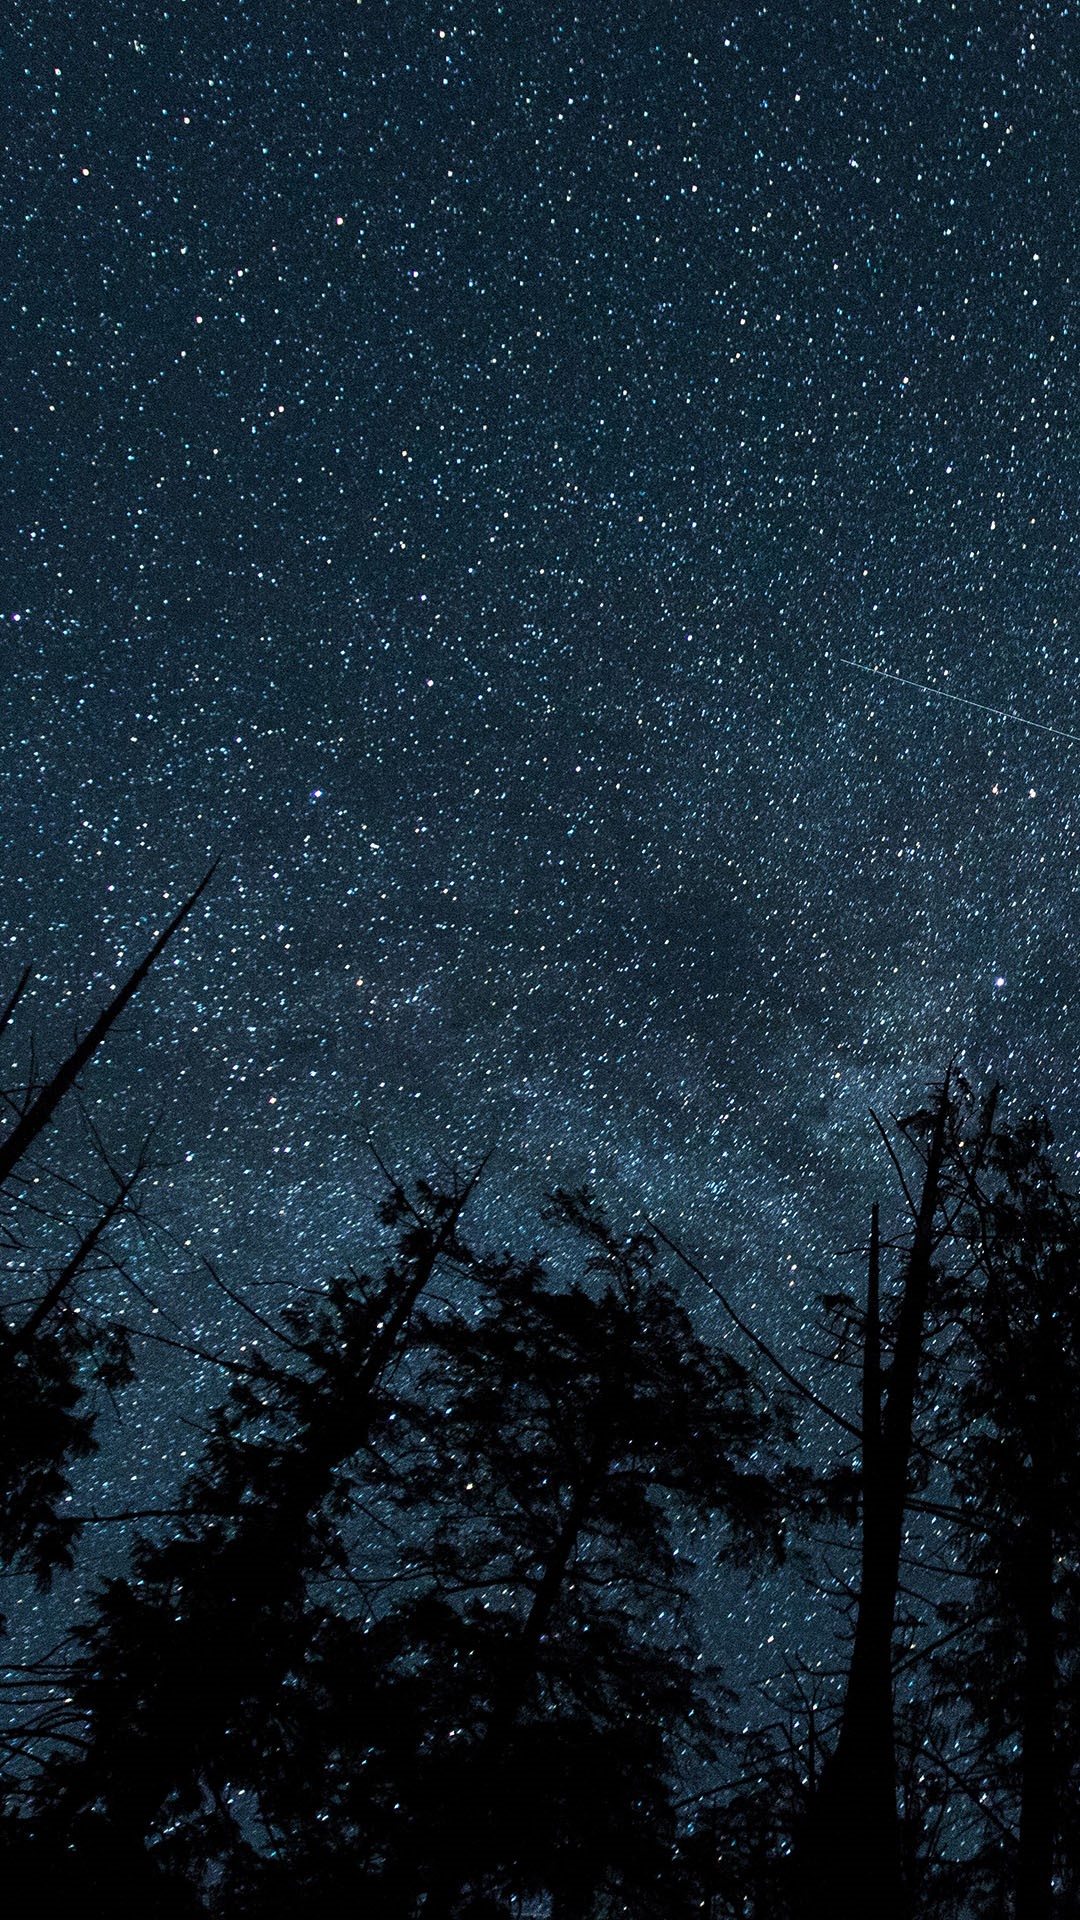 Sky over woods at night | Windows Spotlight Images